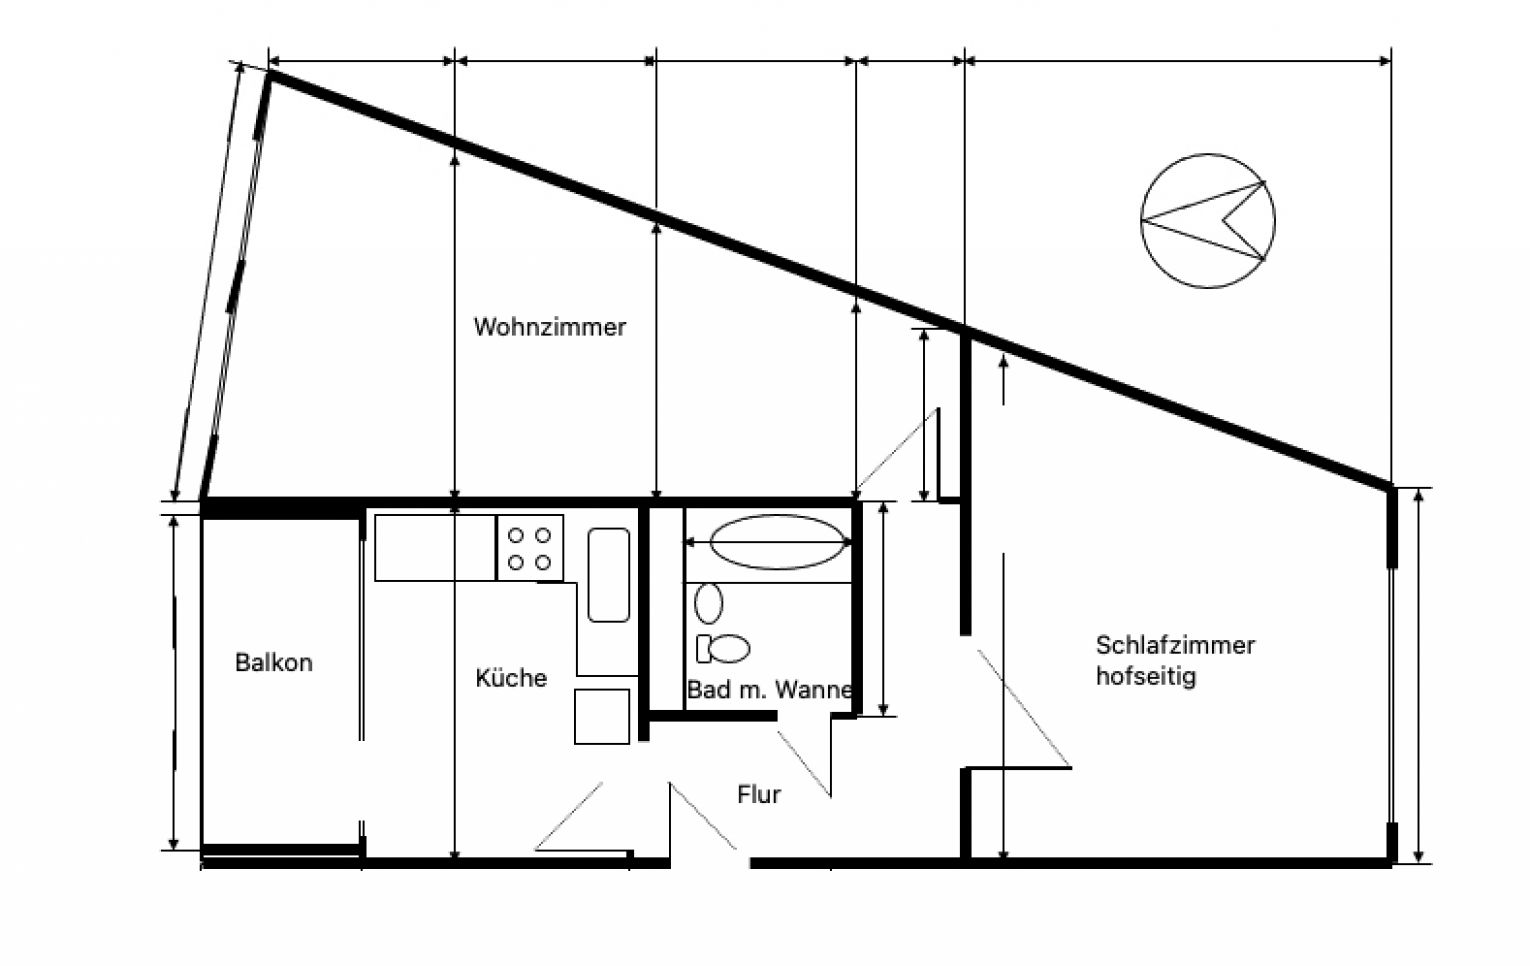 Eigentumswohnung • Berlin/Köpenick • 2-Zimmer • Balkon • Erdgeschoss • Bad mit Wanne • frei ab 03/23